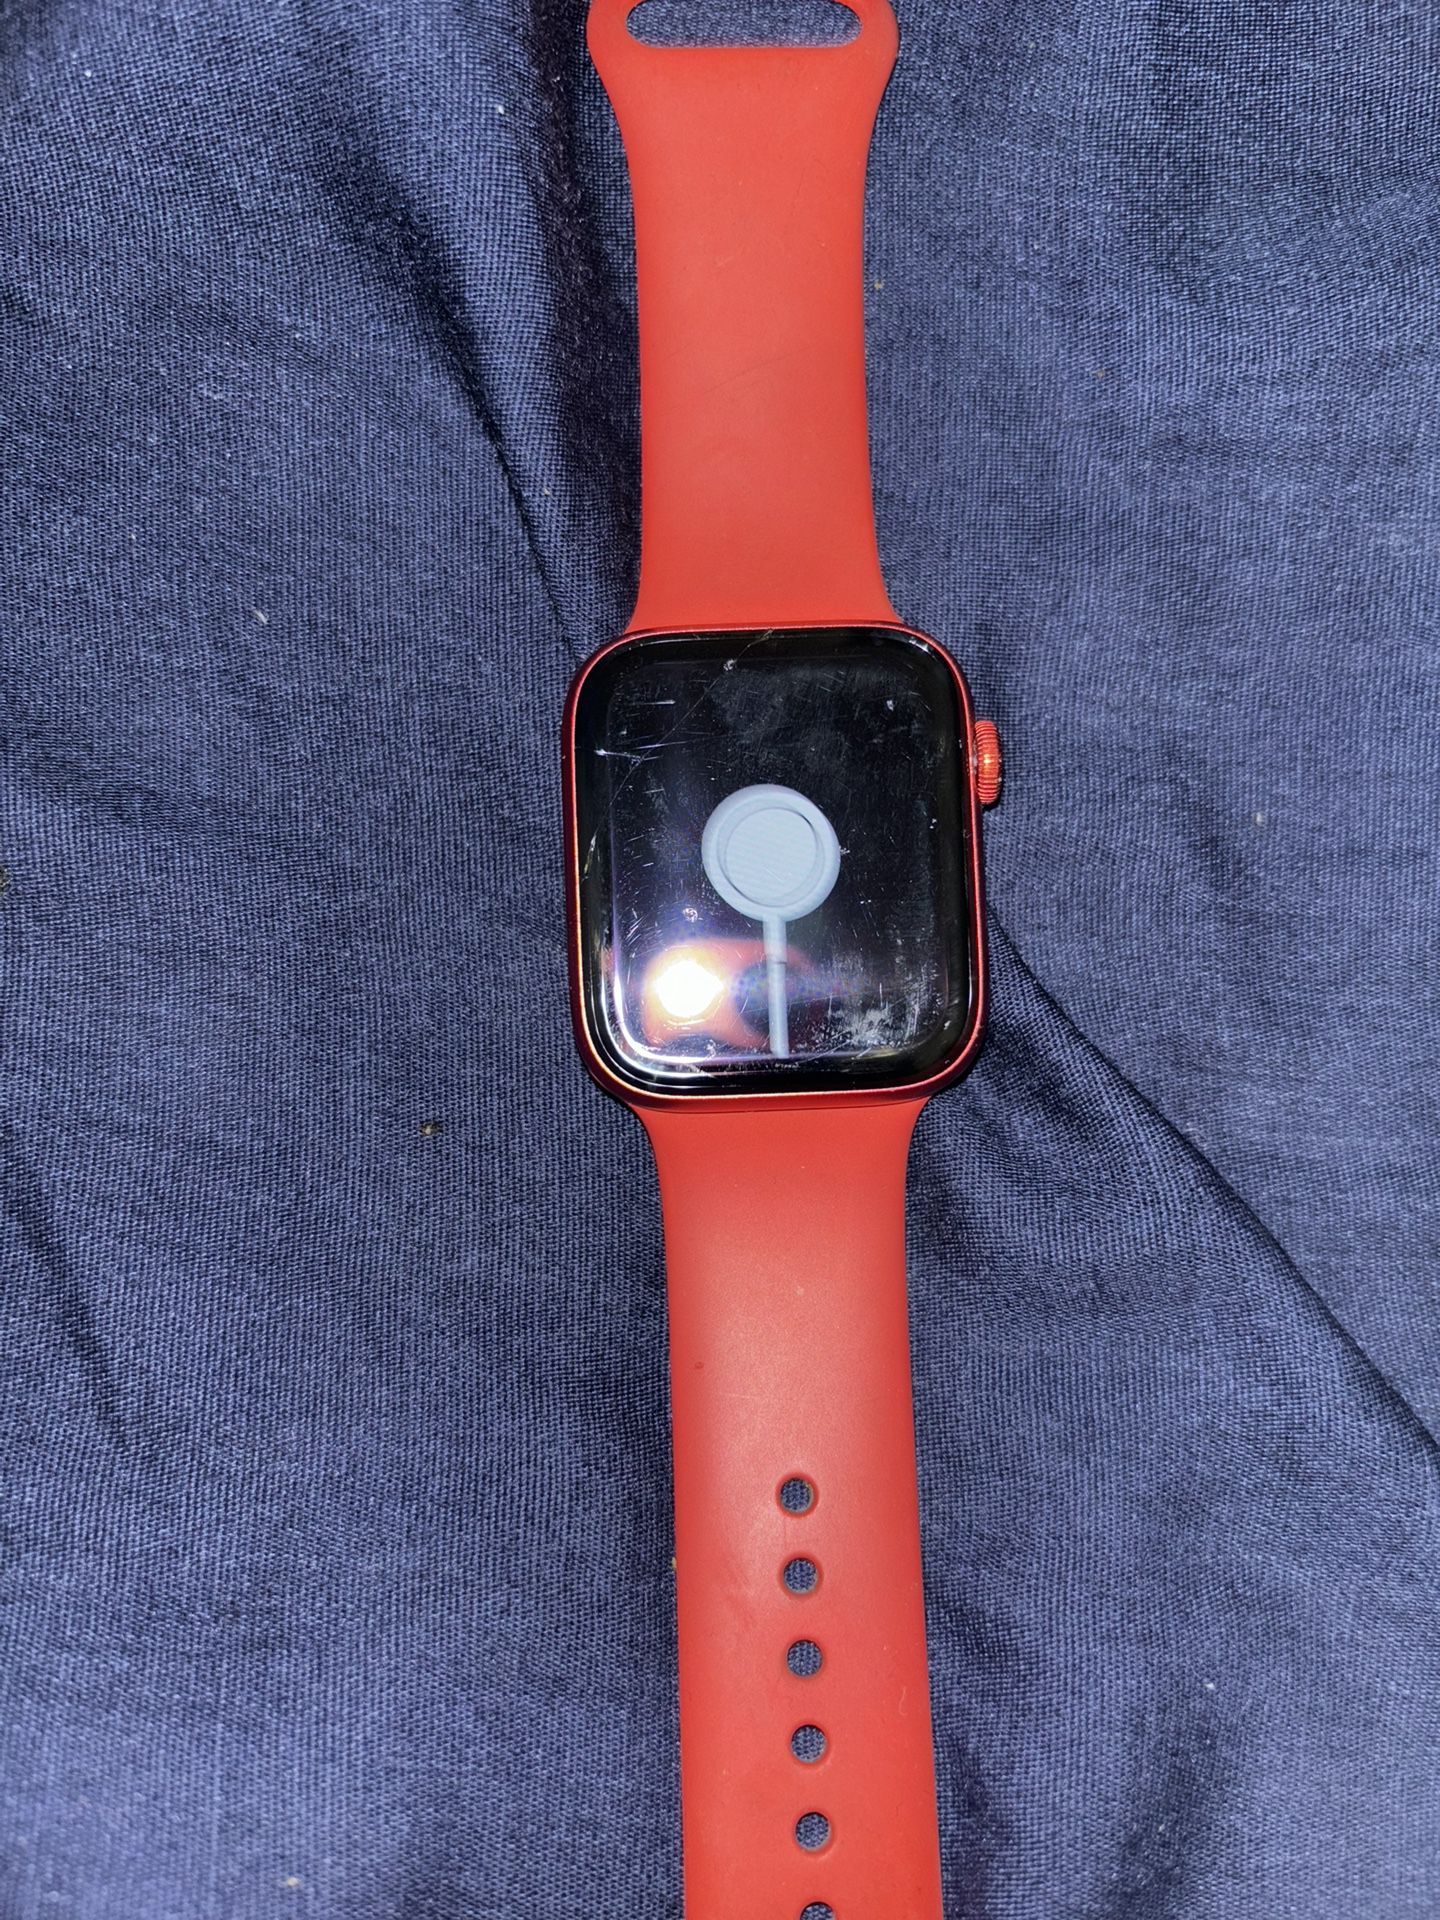 Apple Watch Series 6 50m RED